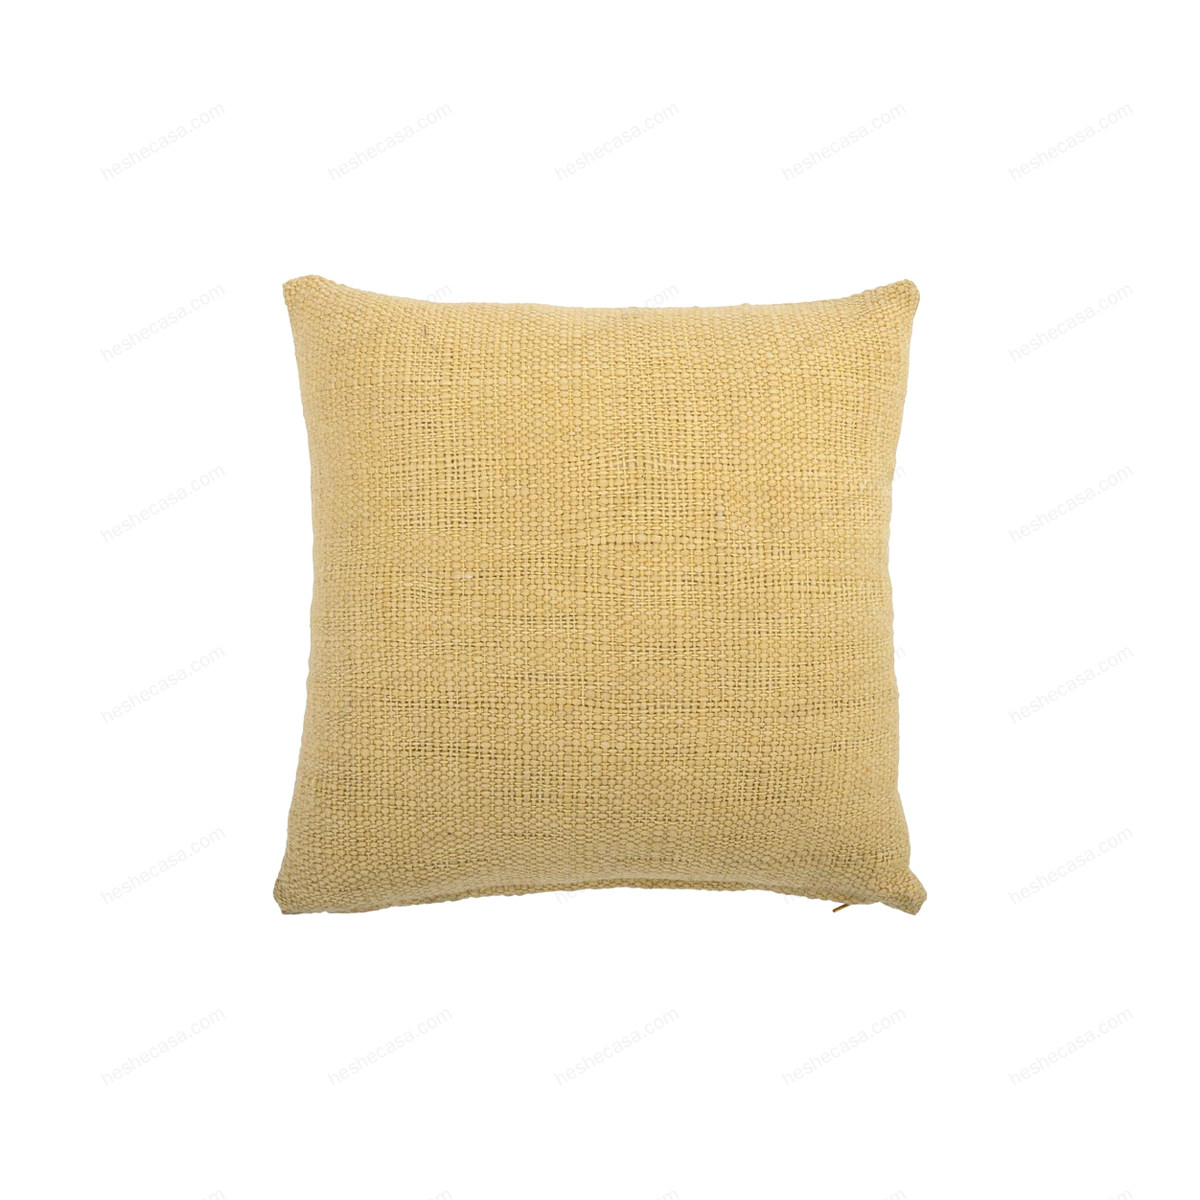 Annemethe Cushion, Yellow, Acrylic靠垫